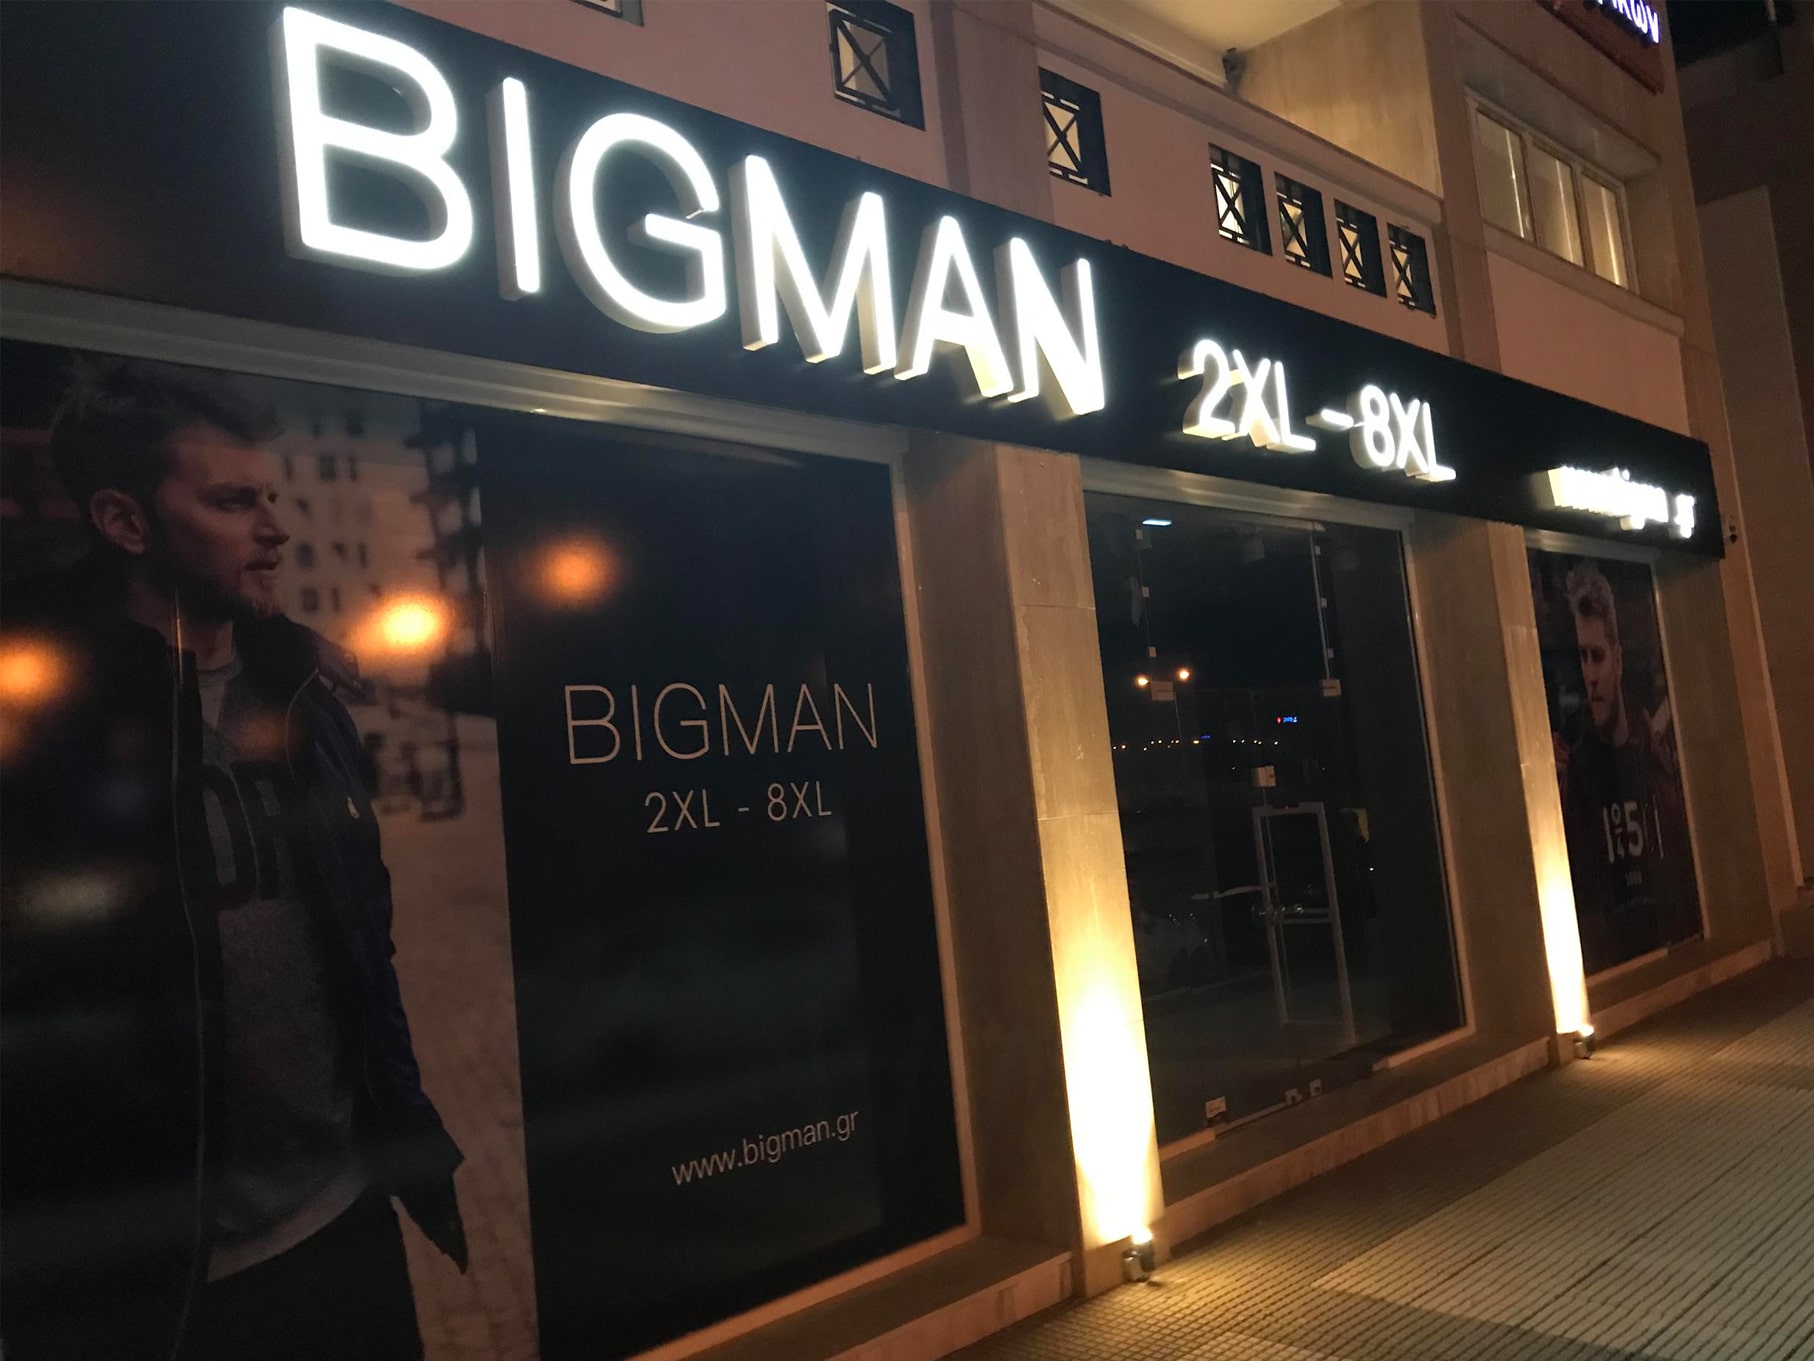 Publicity cabbage Too Καταστήματα - Ανδρικά ρούχα σε μεγάλα μεγέθη - Bigman.gr